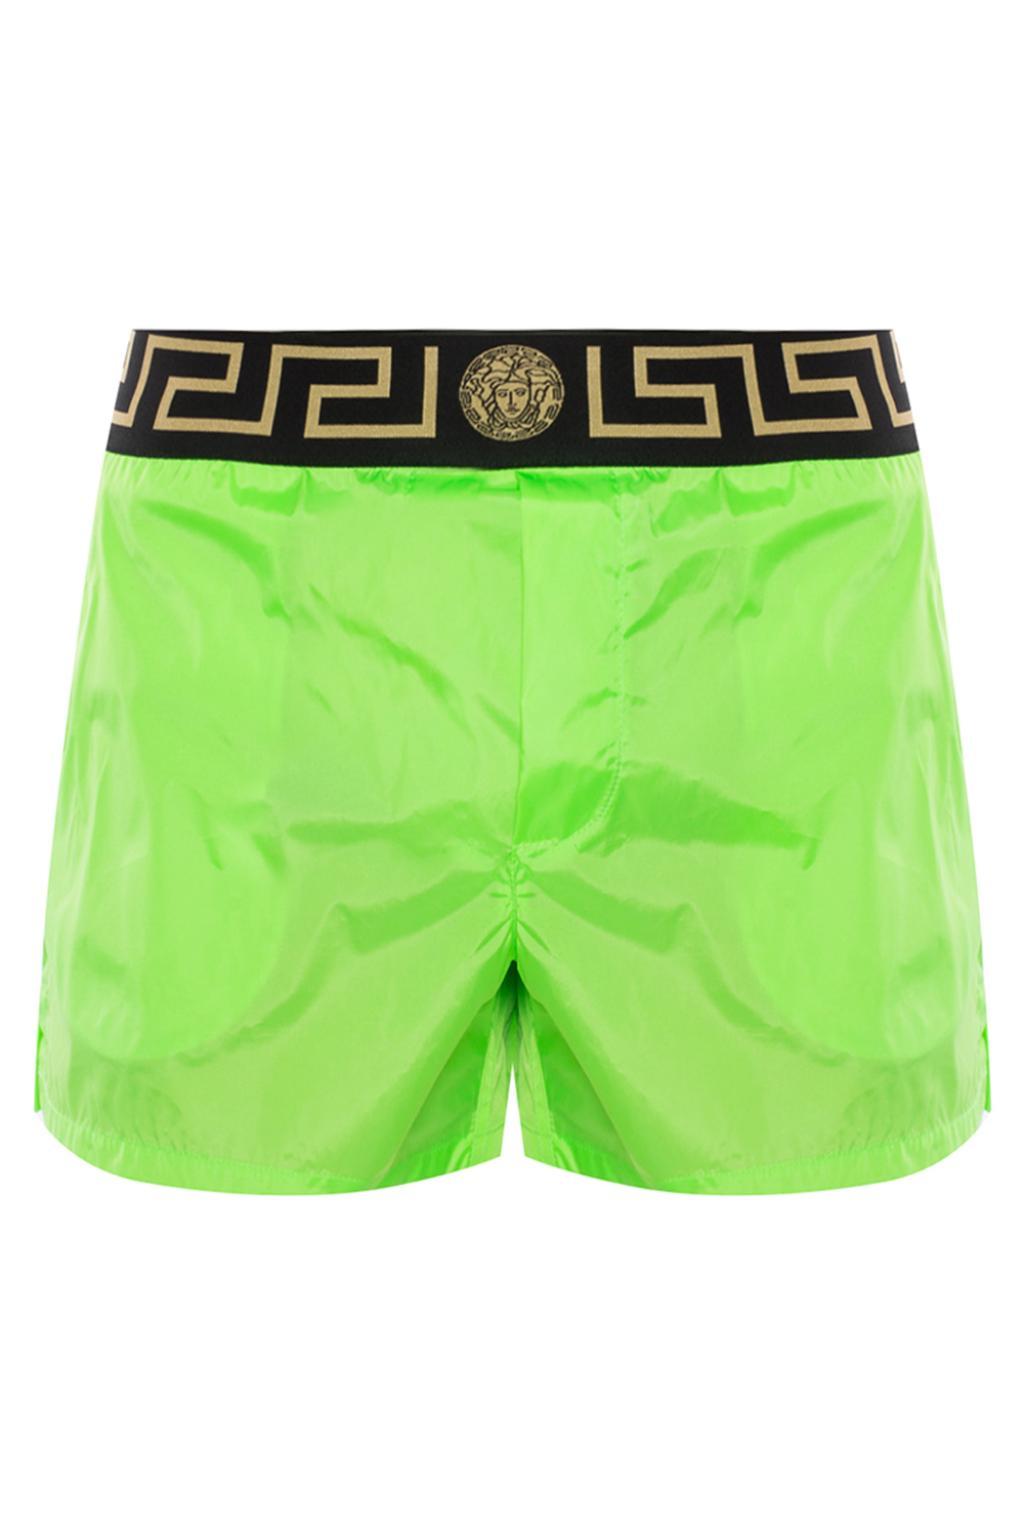 versace green swim shorts